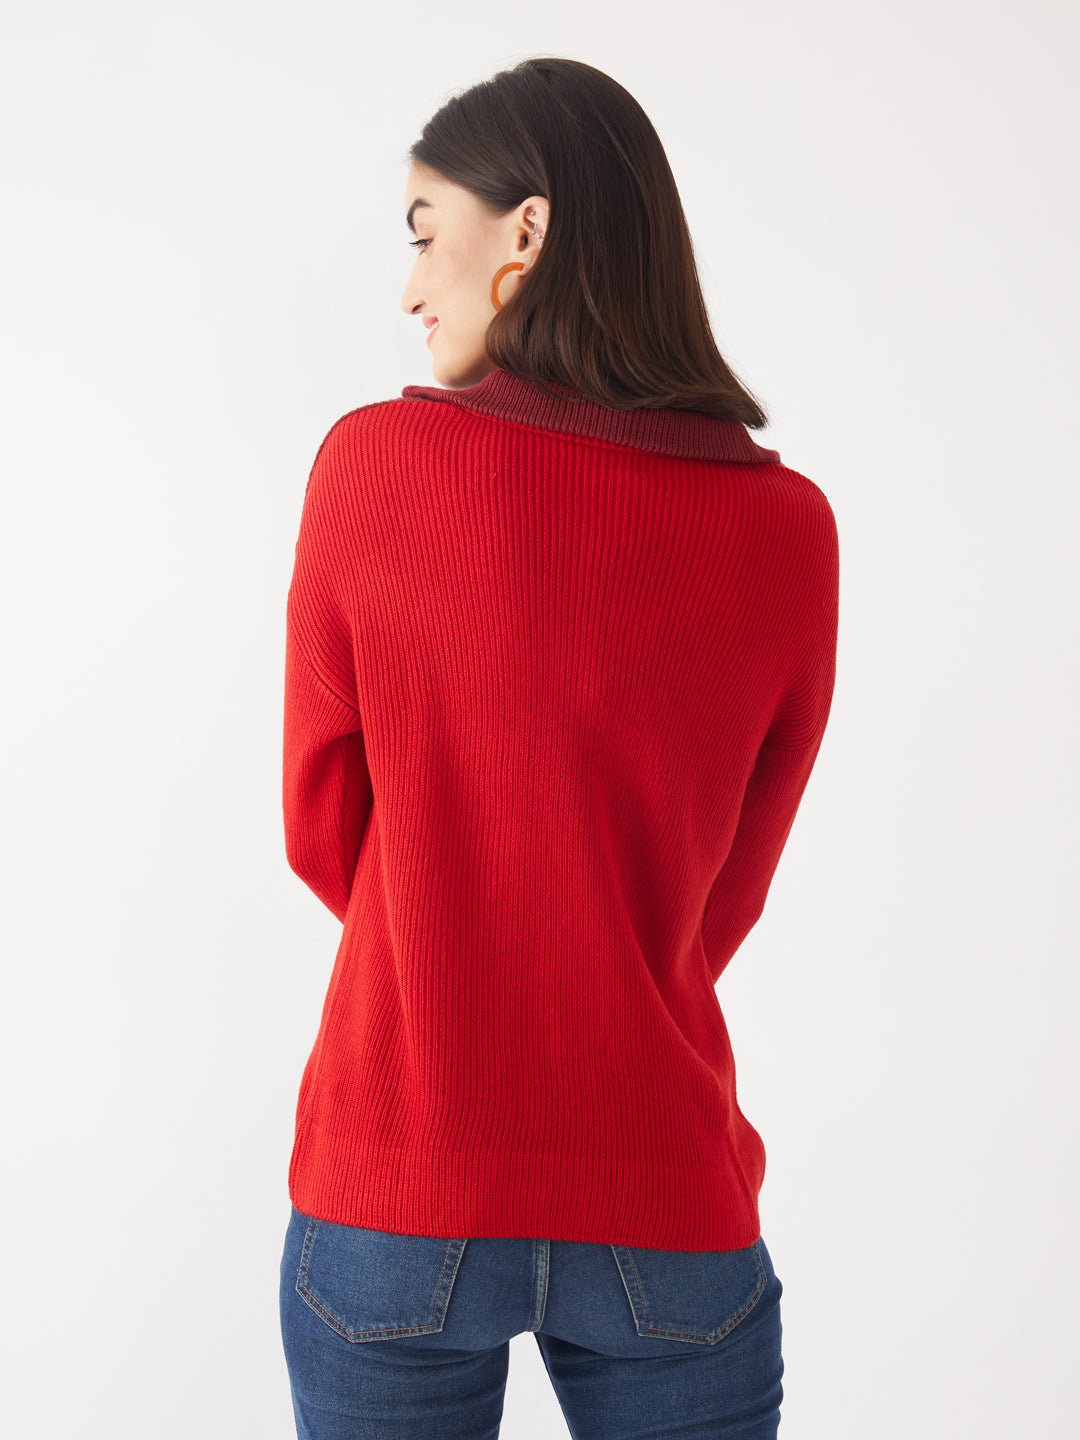 Maroon Colourblocked Sweater For Women